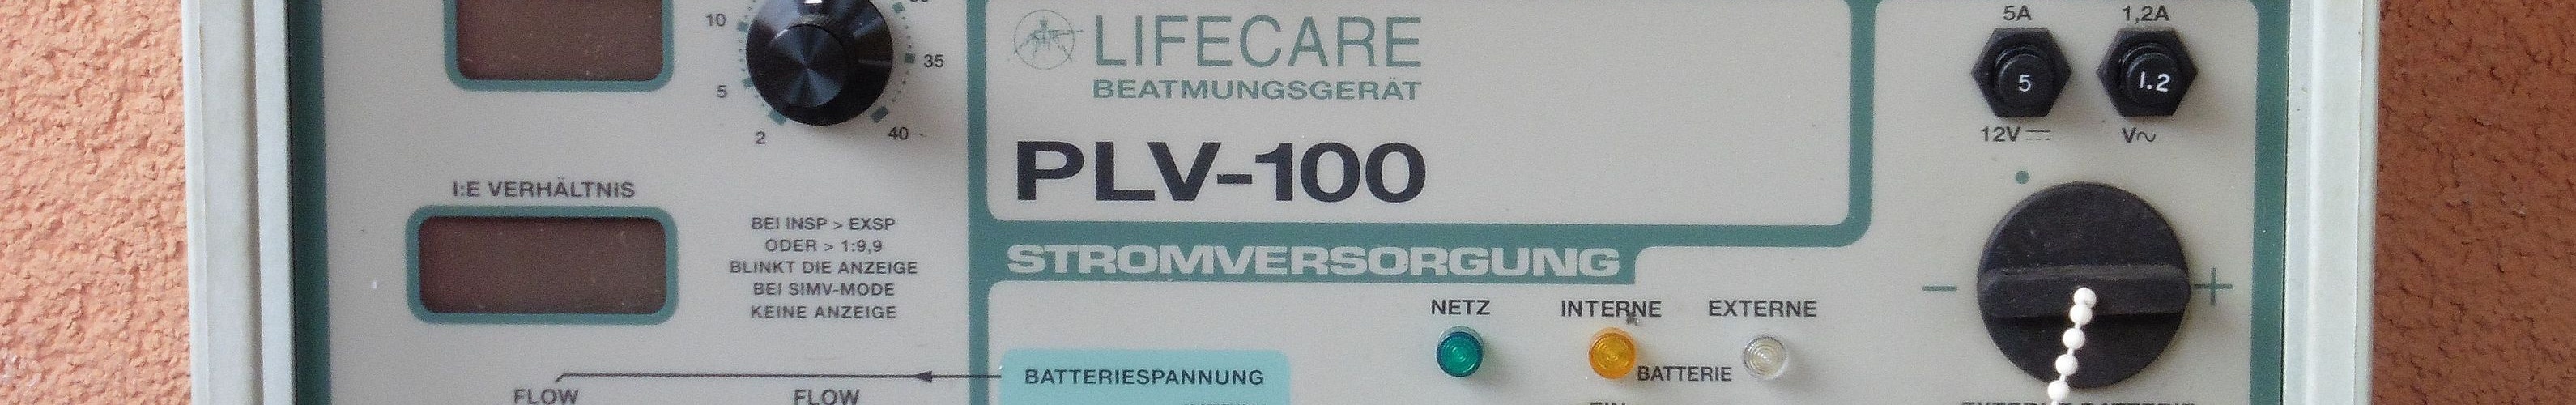 respirator_ lifecare_plv100_01